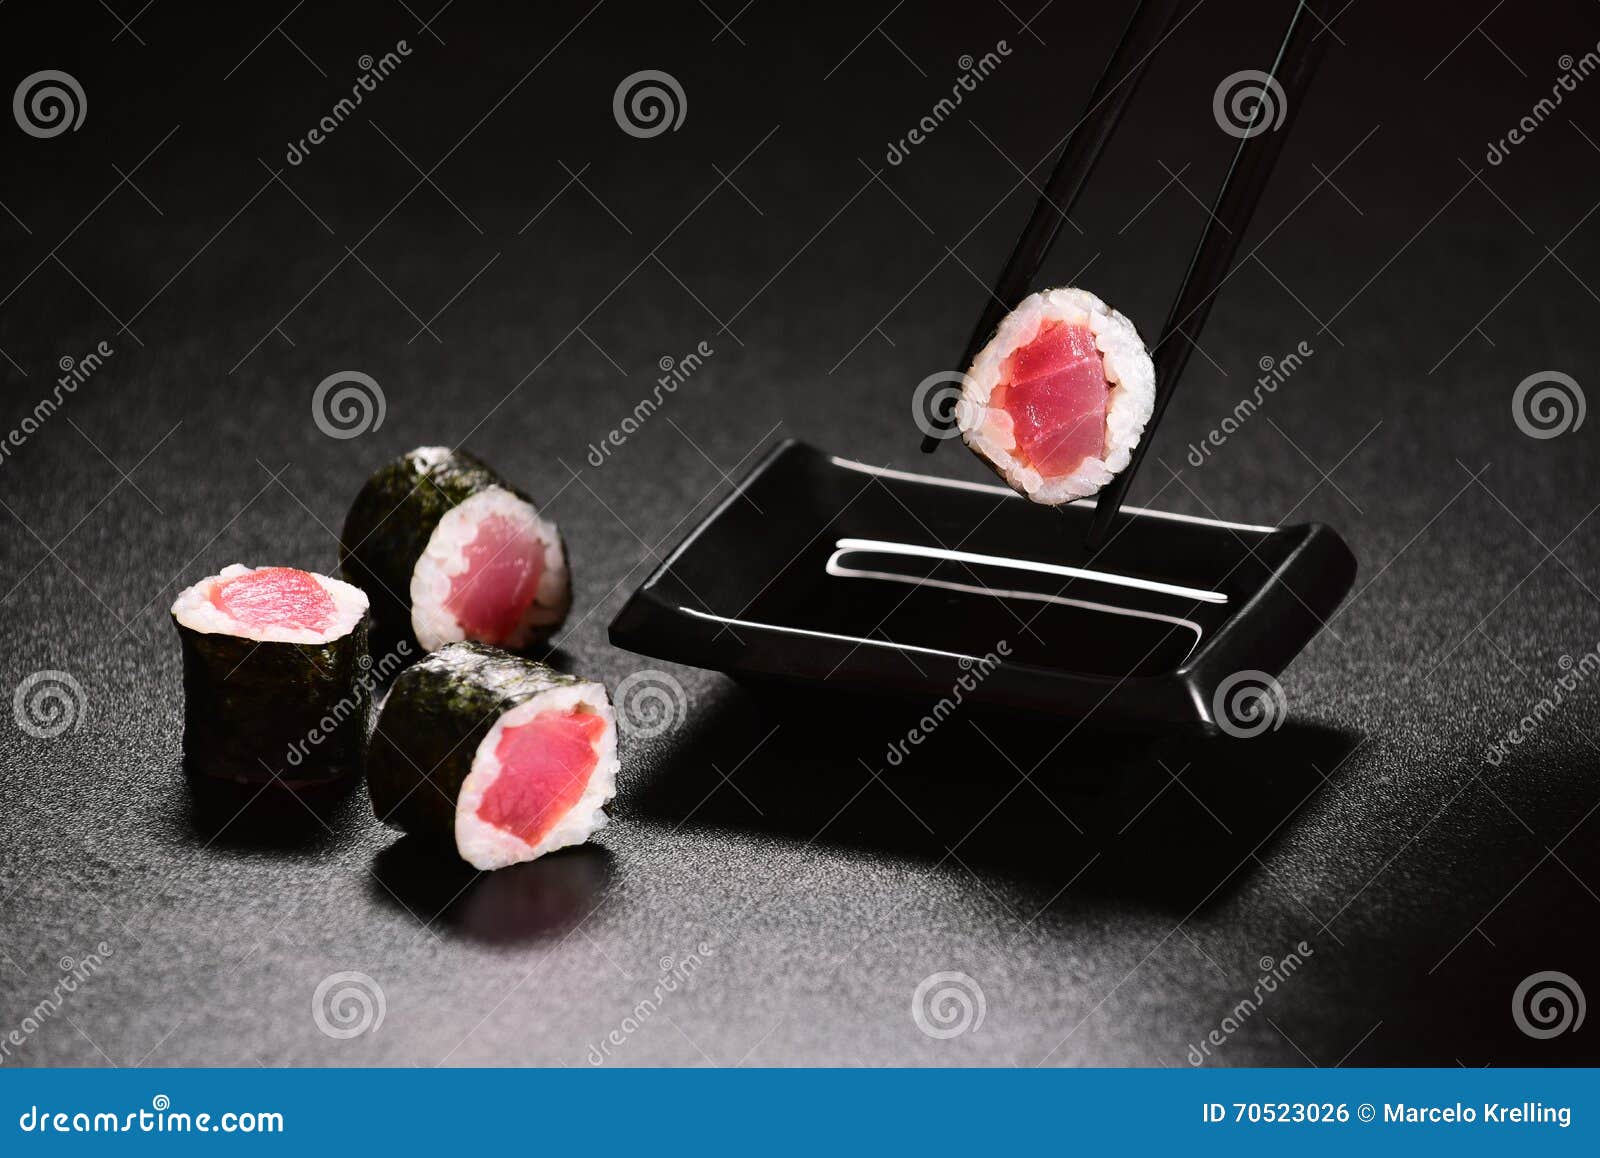 hossomaki sushi